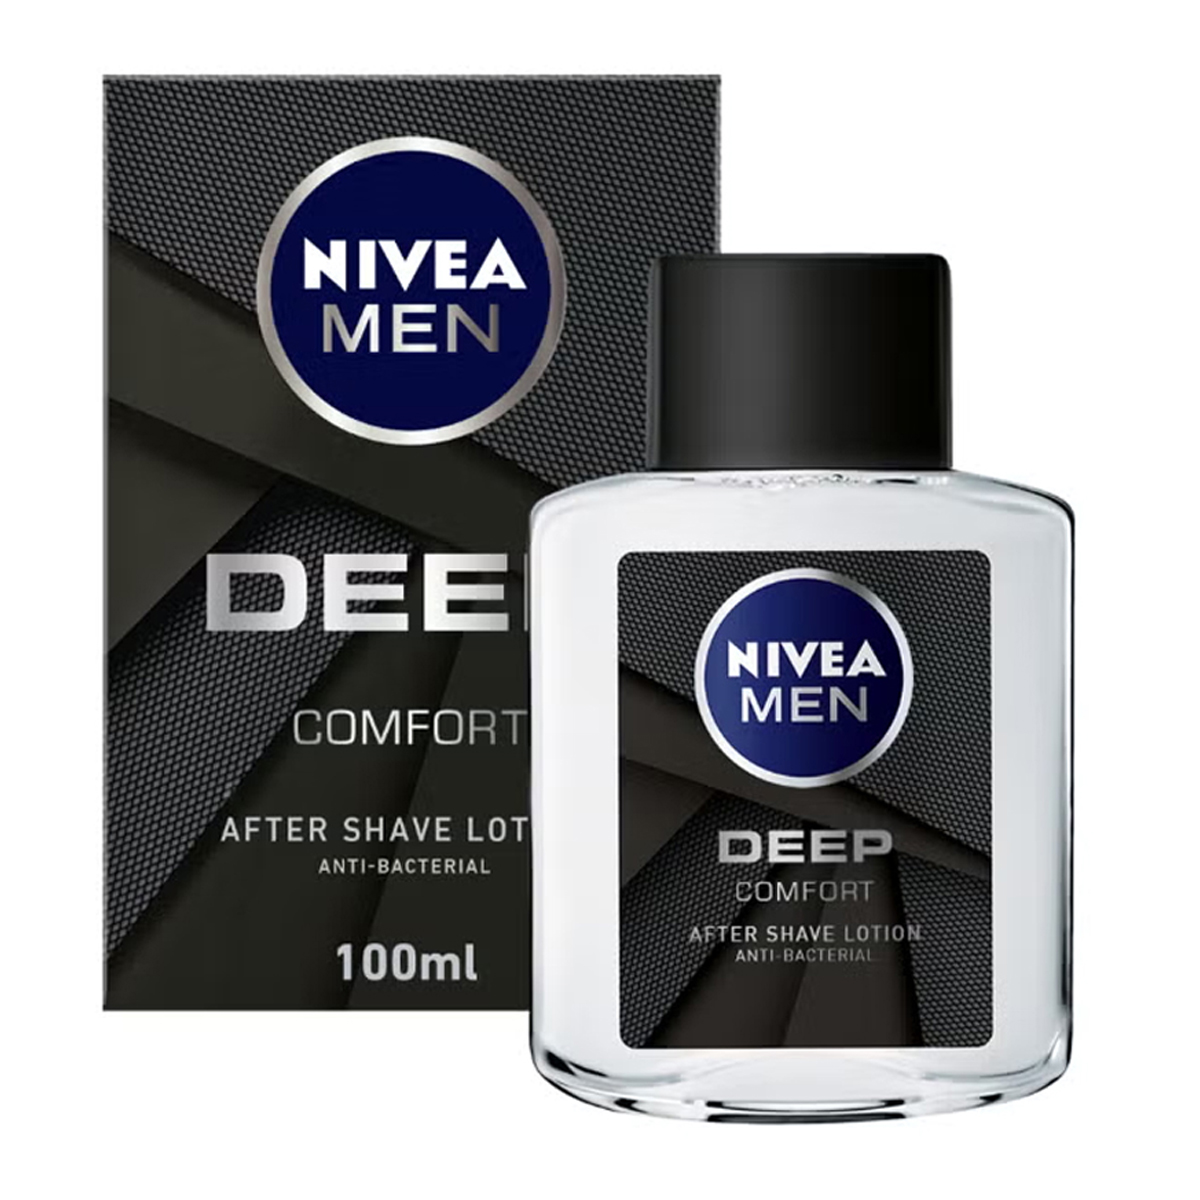 لوسیون افتر شیو دیپ~Deep Comfort fter Shave lotion~NIVEA